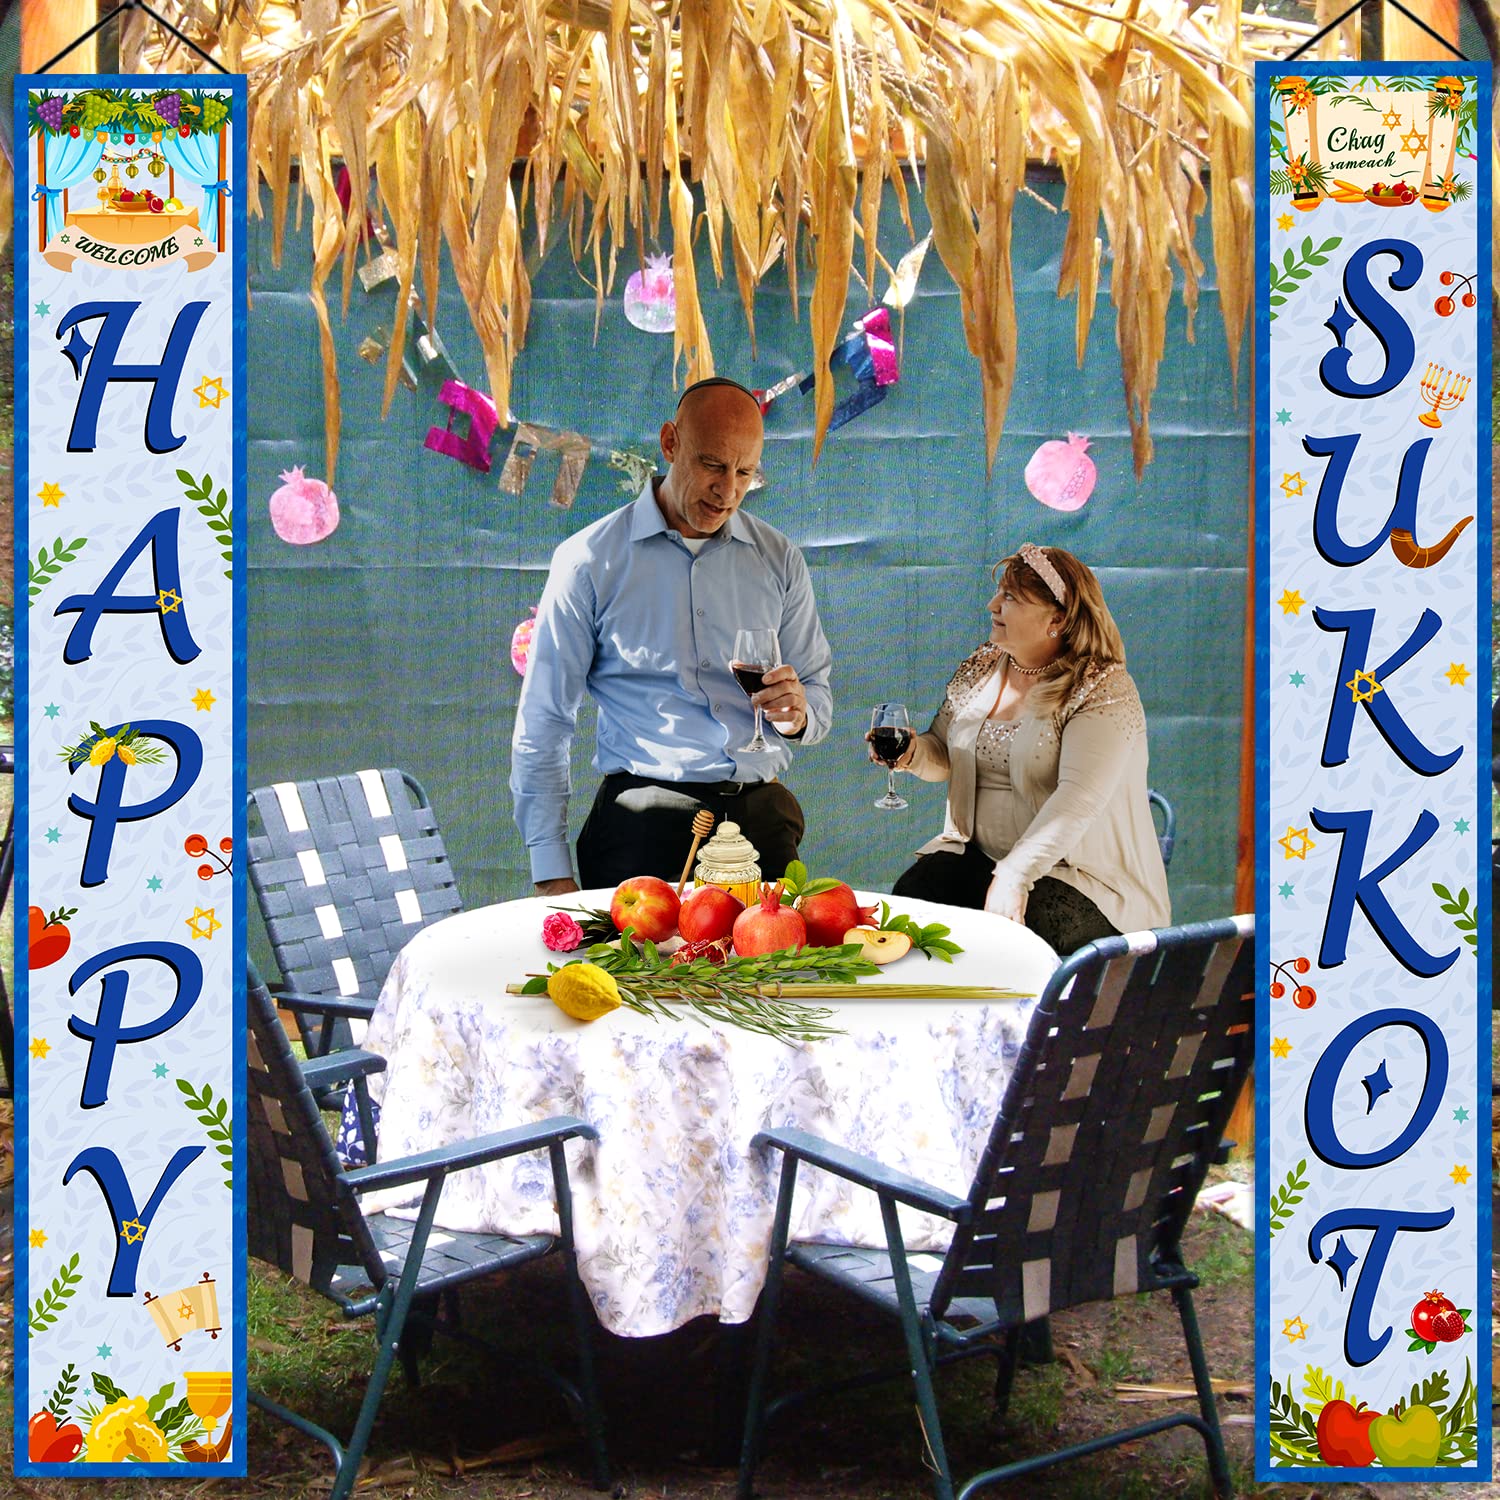 tineit Happy Sukkot Decorations, Happy Sukkot Banner Flag, Sukkah Decorations Welcome Porch Sign Sukkot Decorations Outdoor Indoor Door Banner for Jewish Holiday